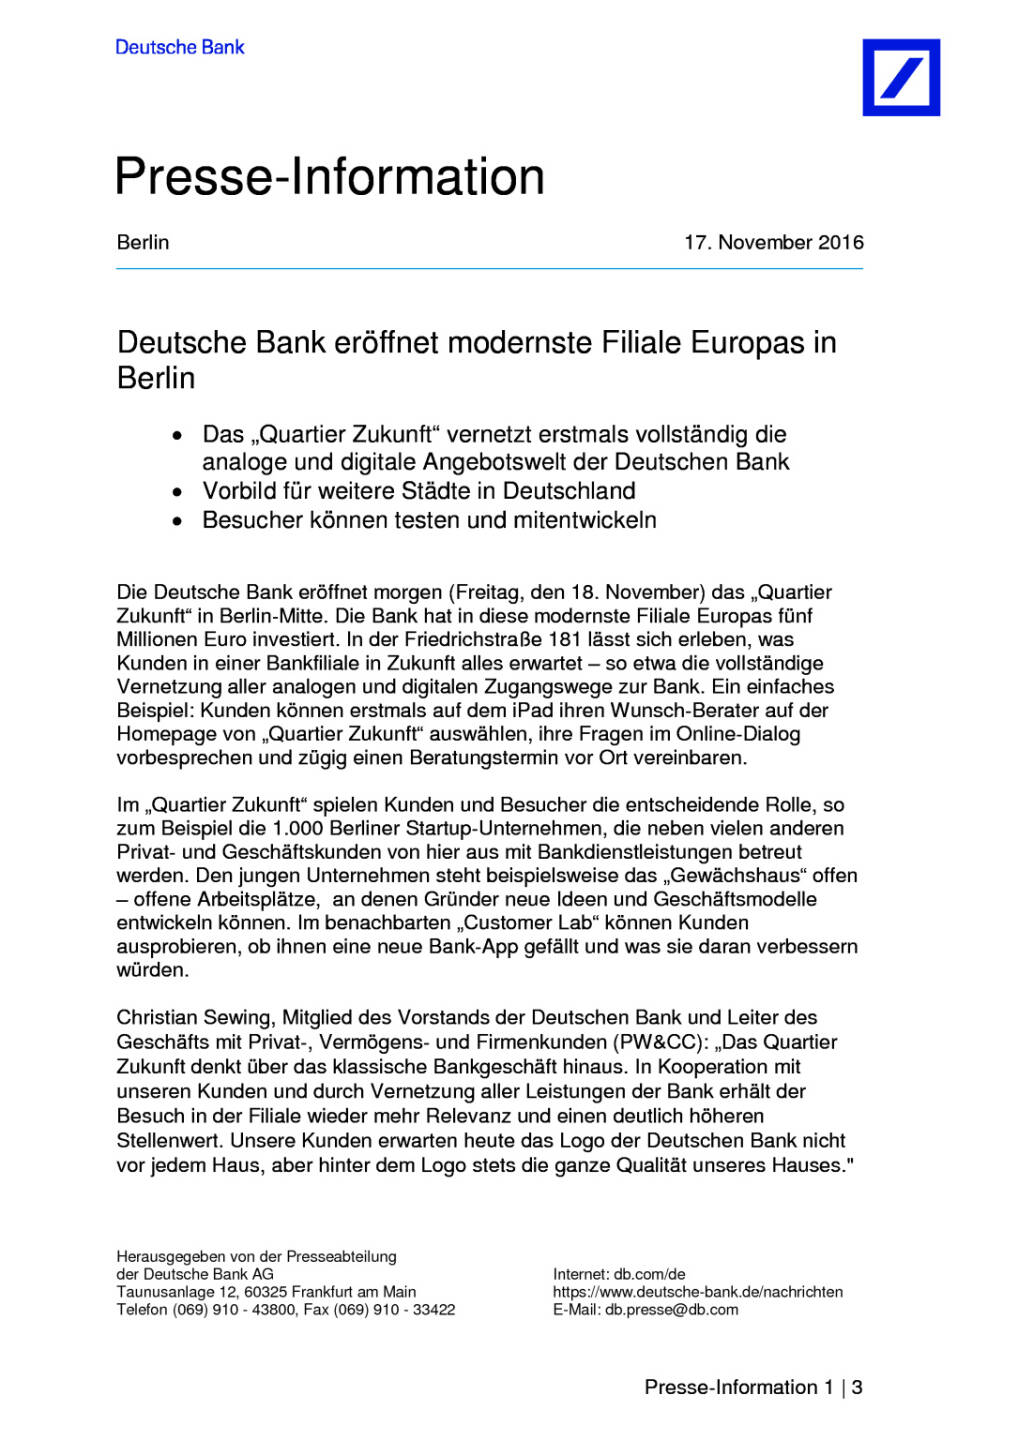 Deutsche Bank eröffnet modernste Filiale Europas in Berlin, Seite 1/3, komplettes Dokument unter http://boerse-social.com/static/uploads/file_1984_deutsche_bank_eroeffnet_modernste_filiale_europas_in_berlin.pdf